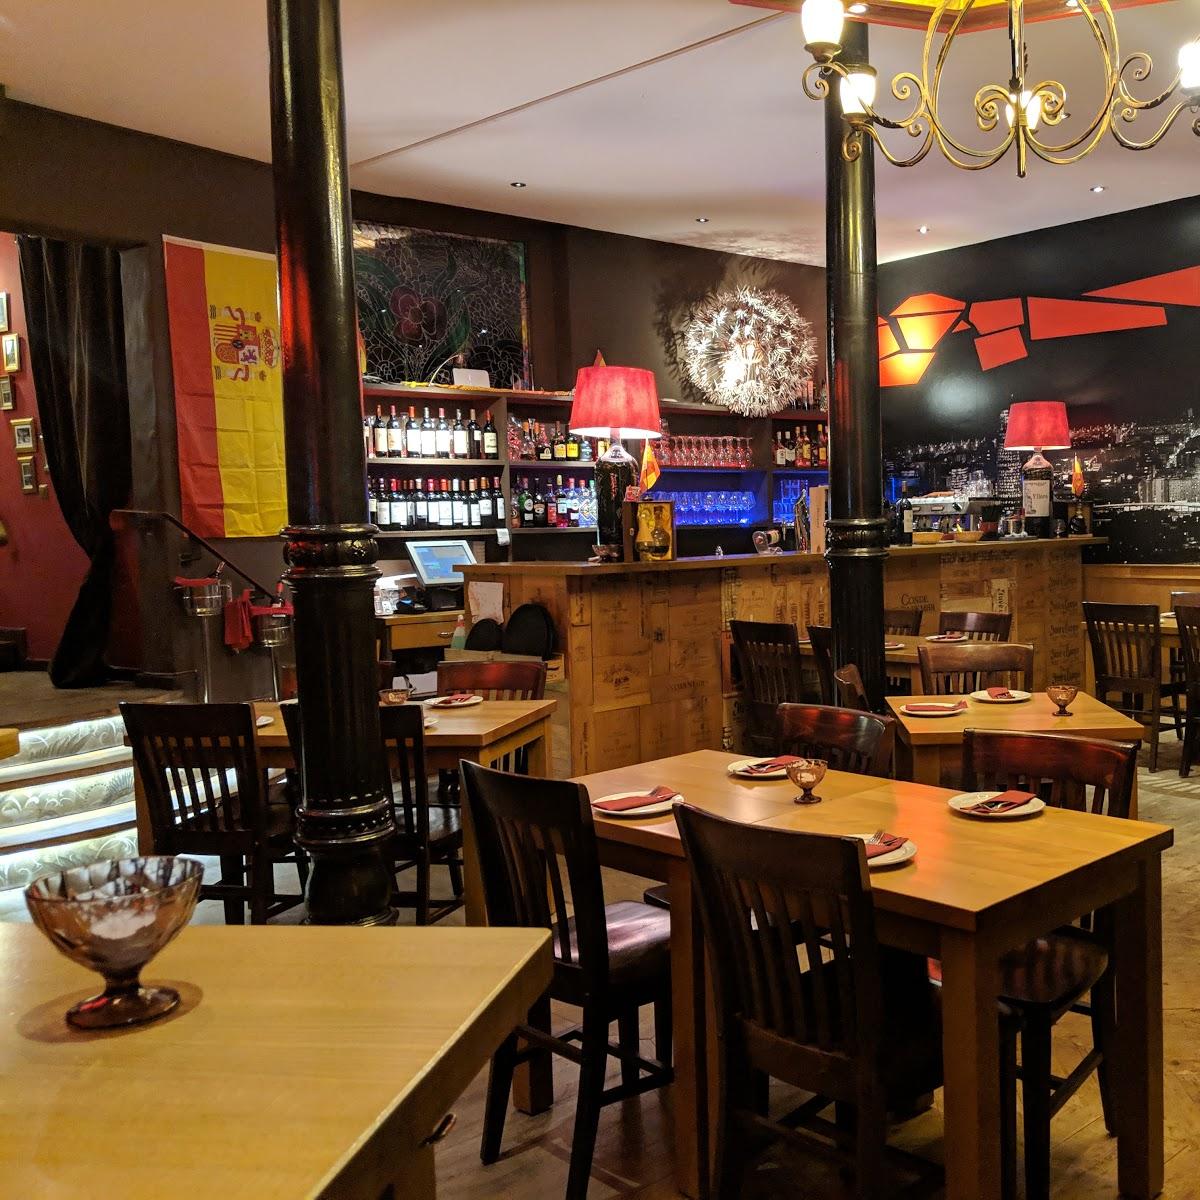 Restaurant "Barcelona Tapas Altona" in Hamburg